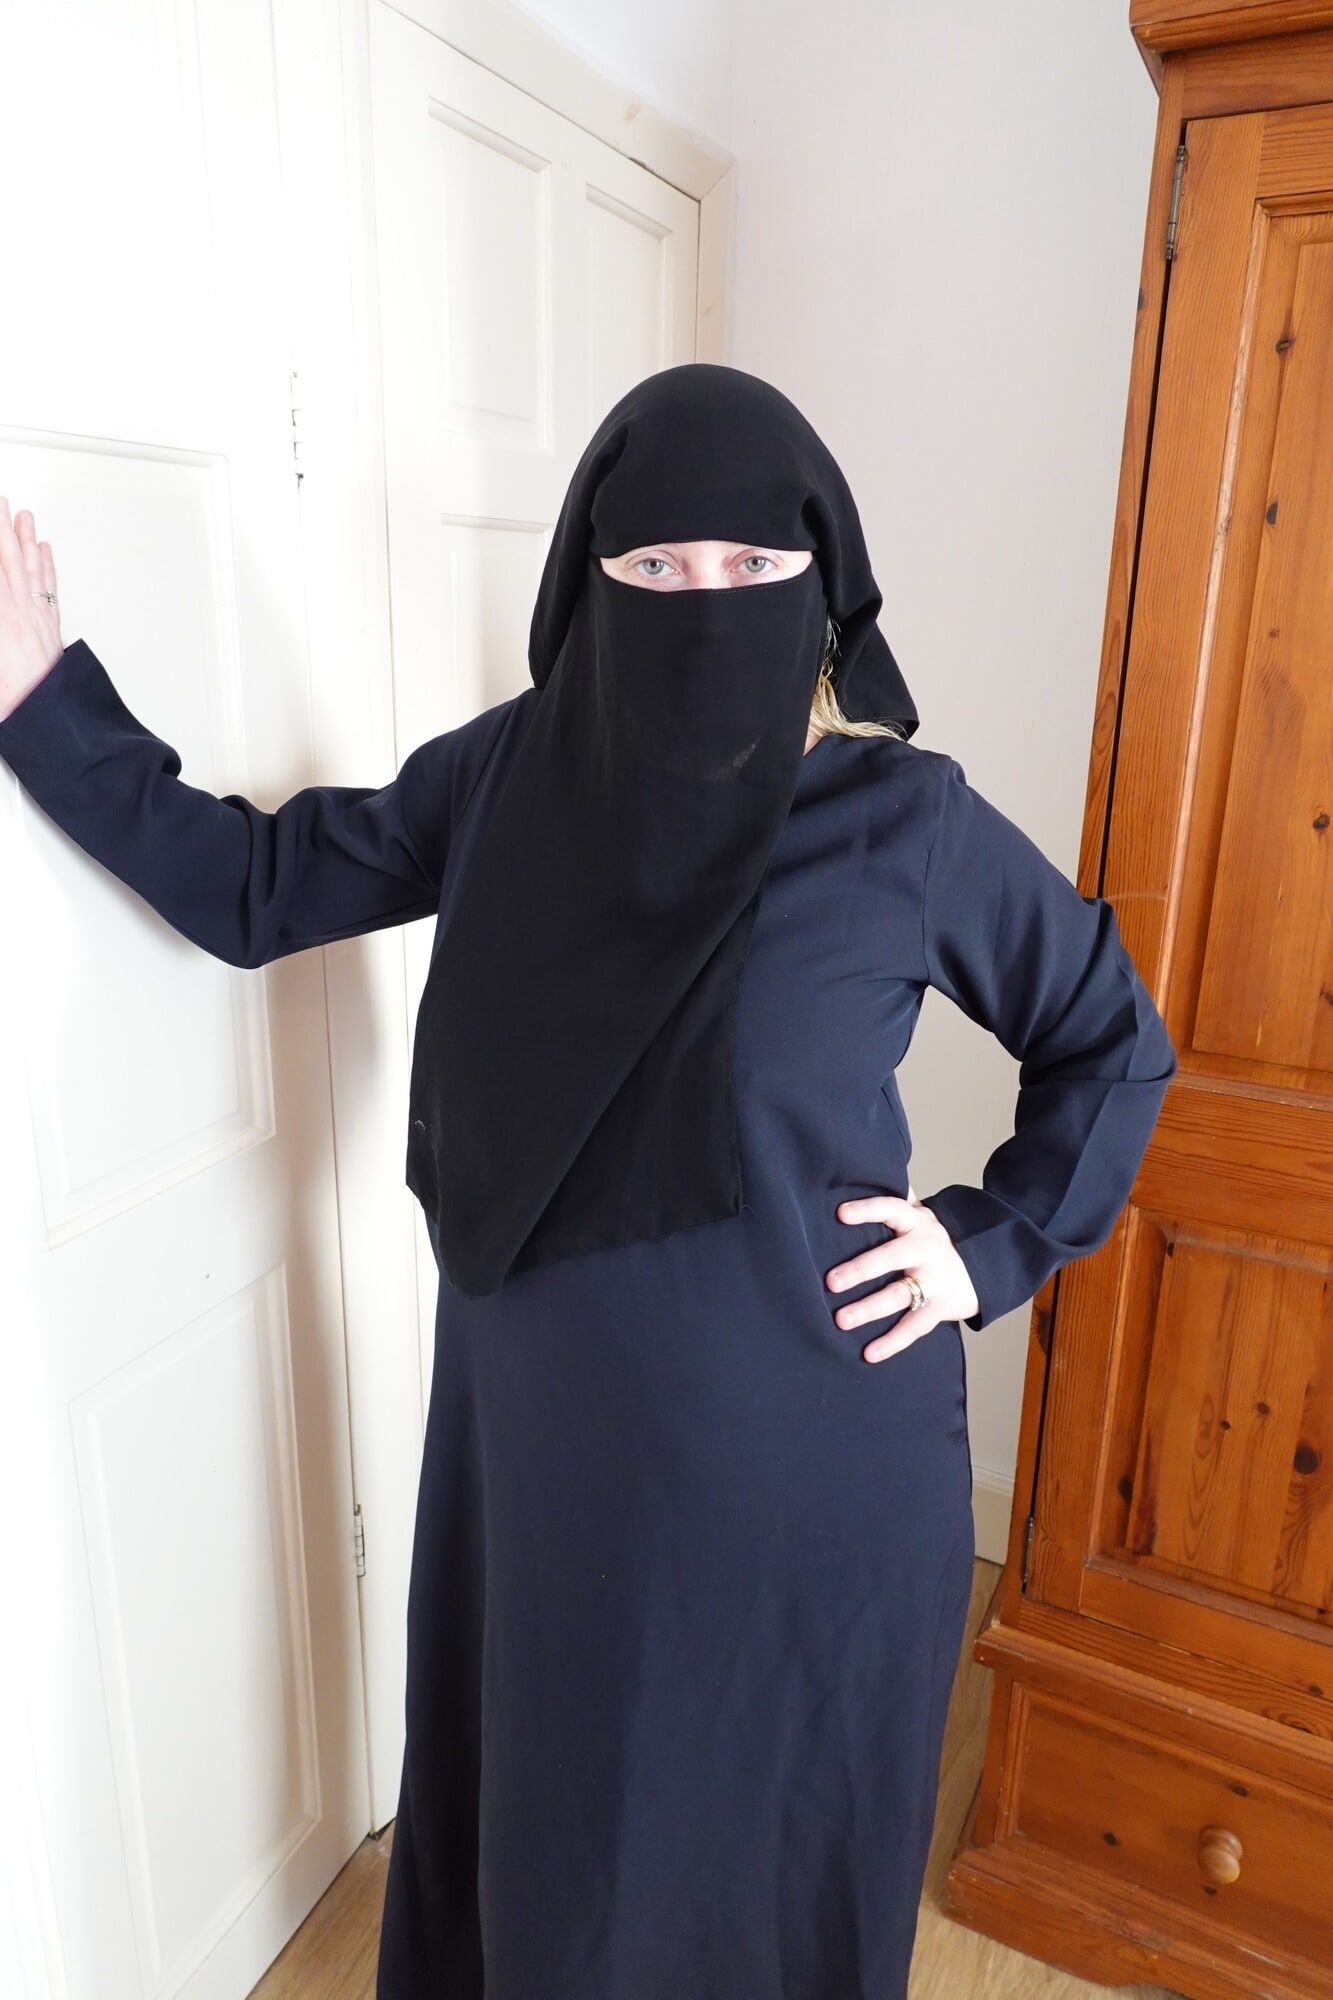 Pale Skin MILF in Burqa and Niqab and High heels #11